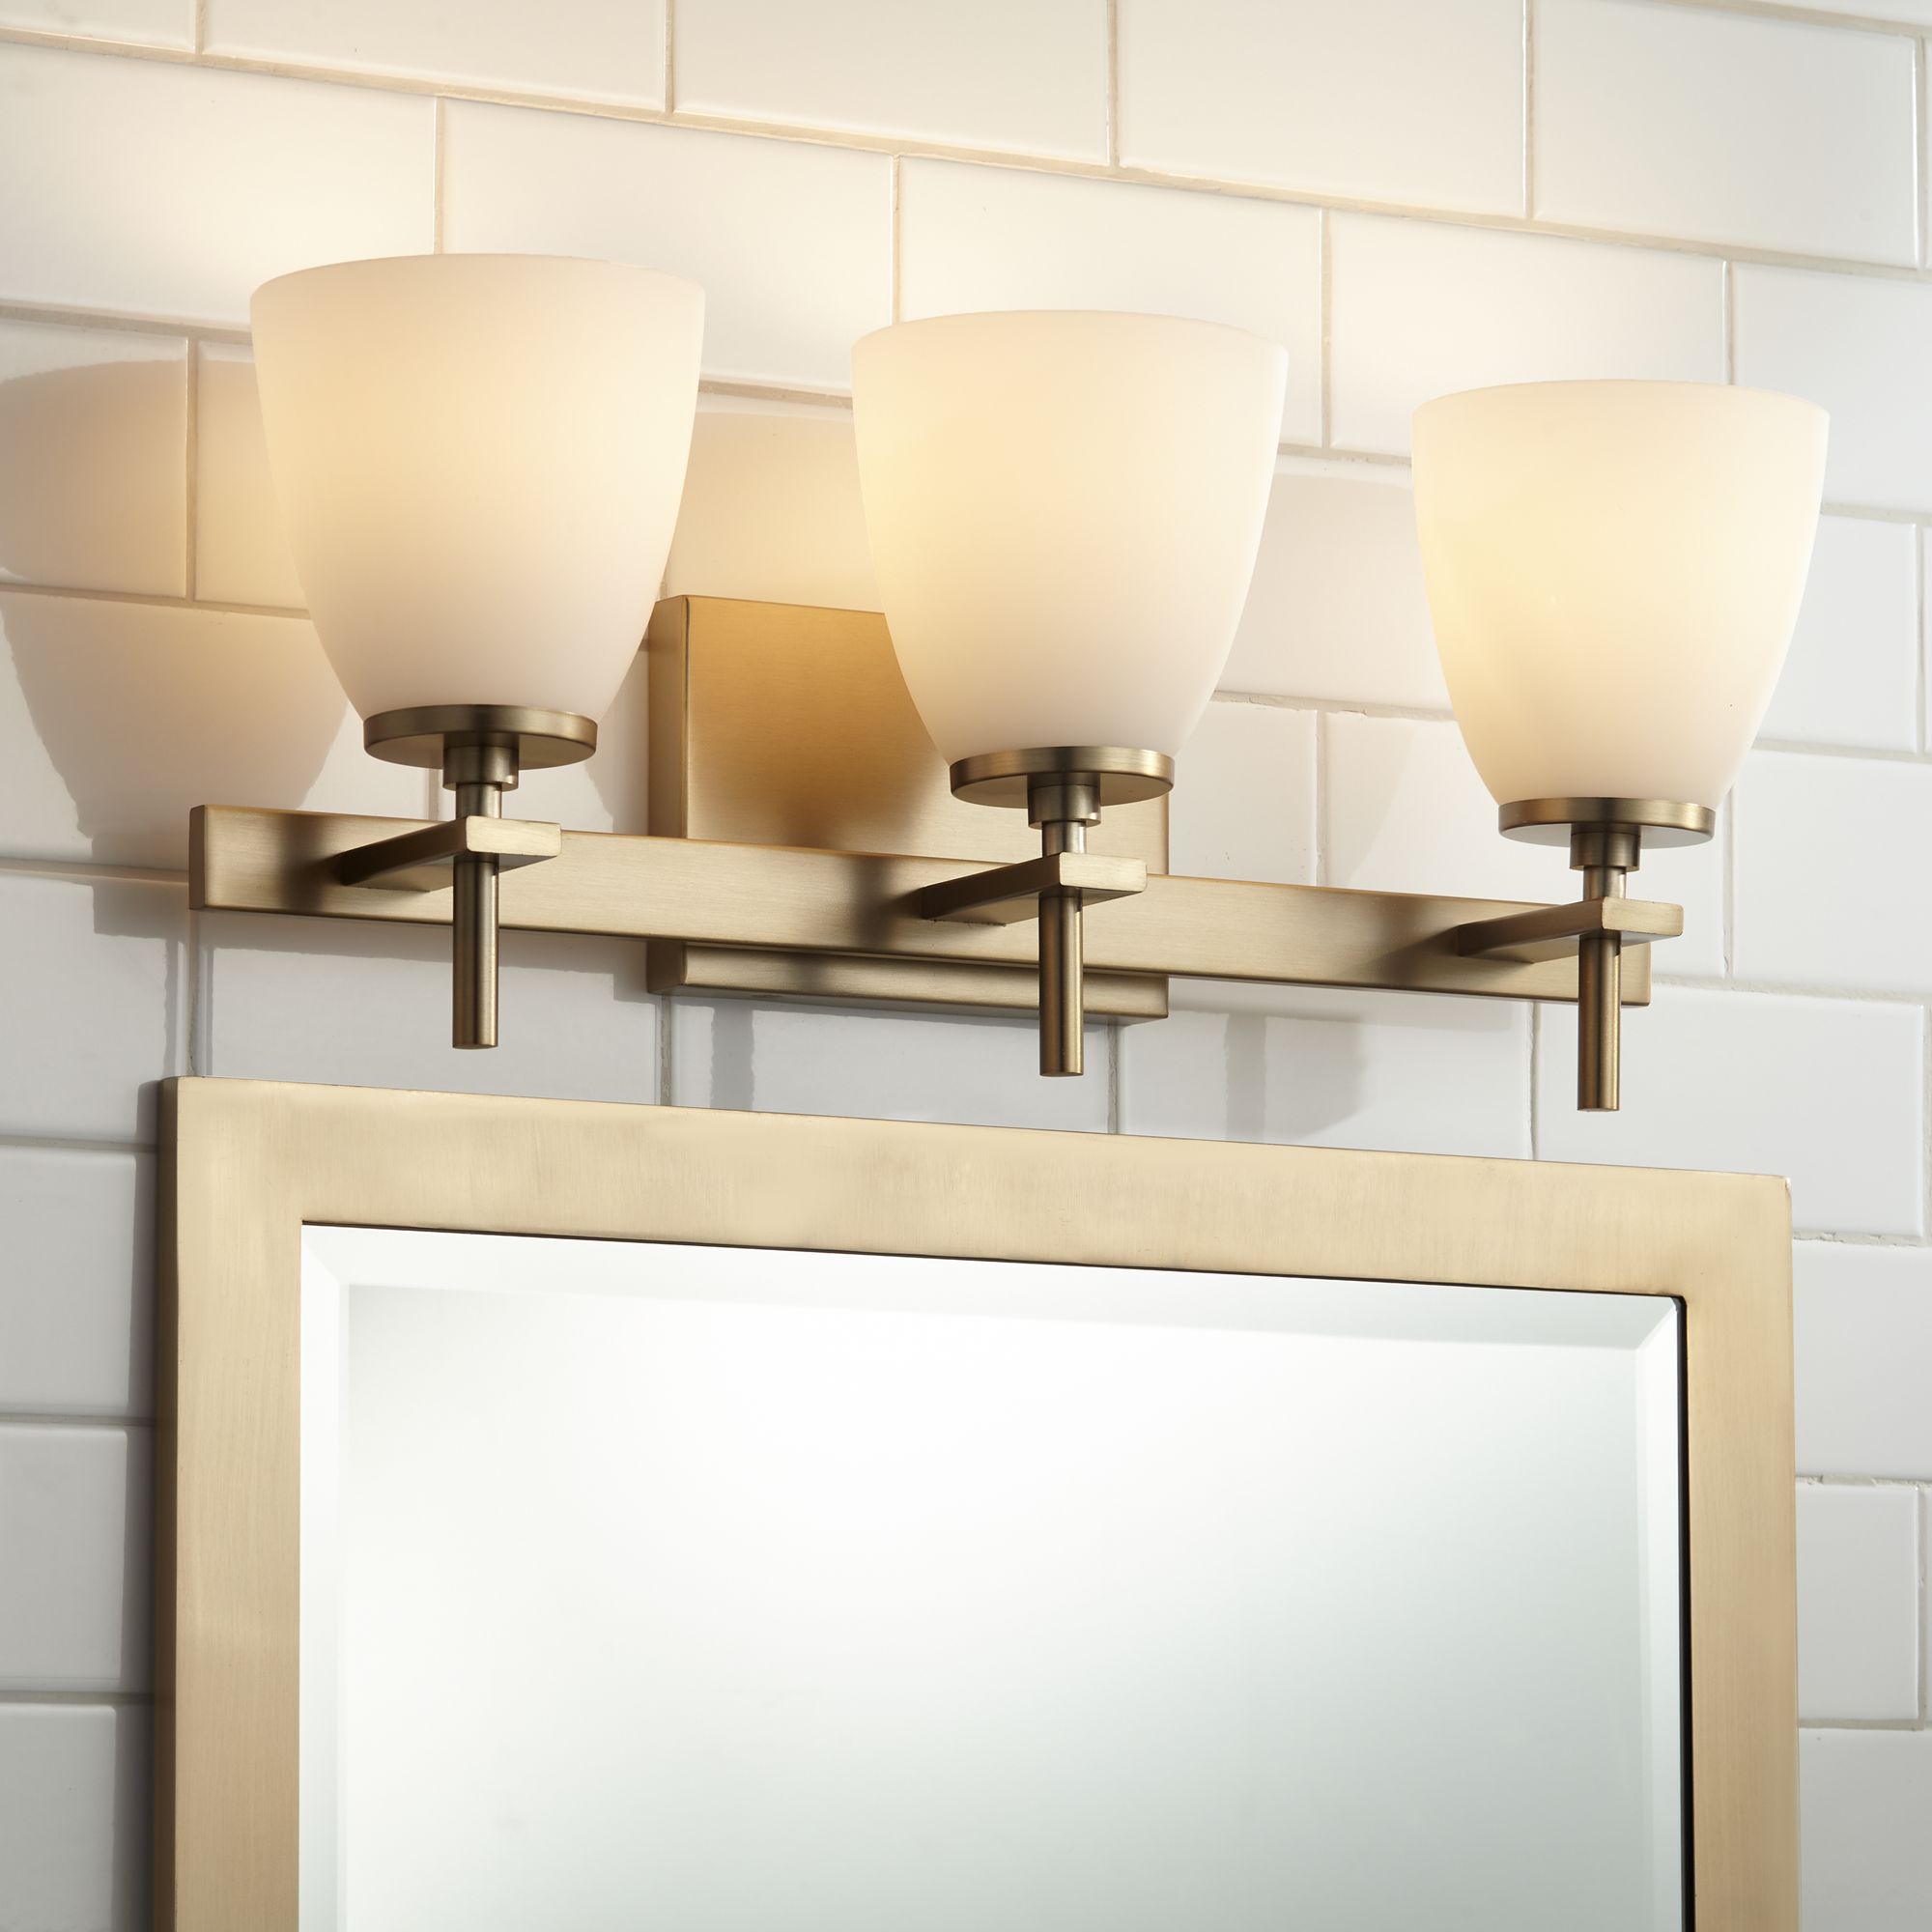 Possini Euro Design Pell Modern Wall Light Brass Hardwire 20" 3-Light Fixture White Frosted Glass for Bedroom Bathroom Vanity Reading Living Room Home - image 1 of 7